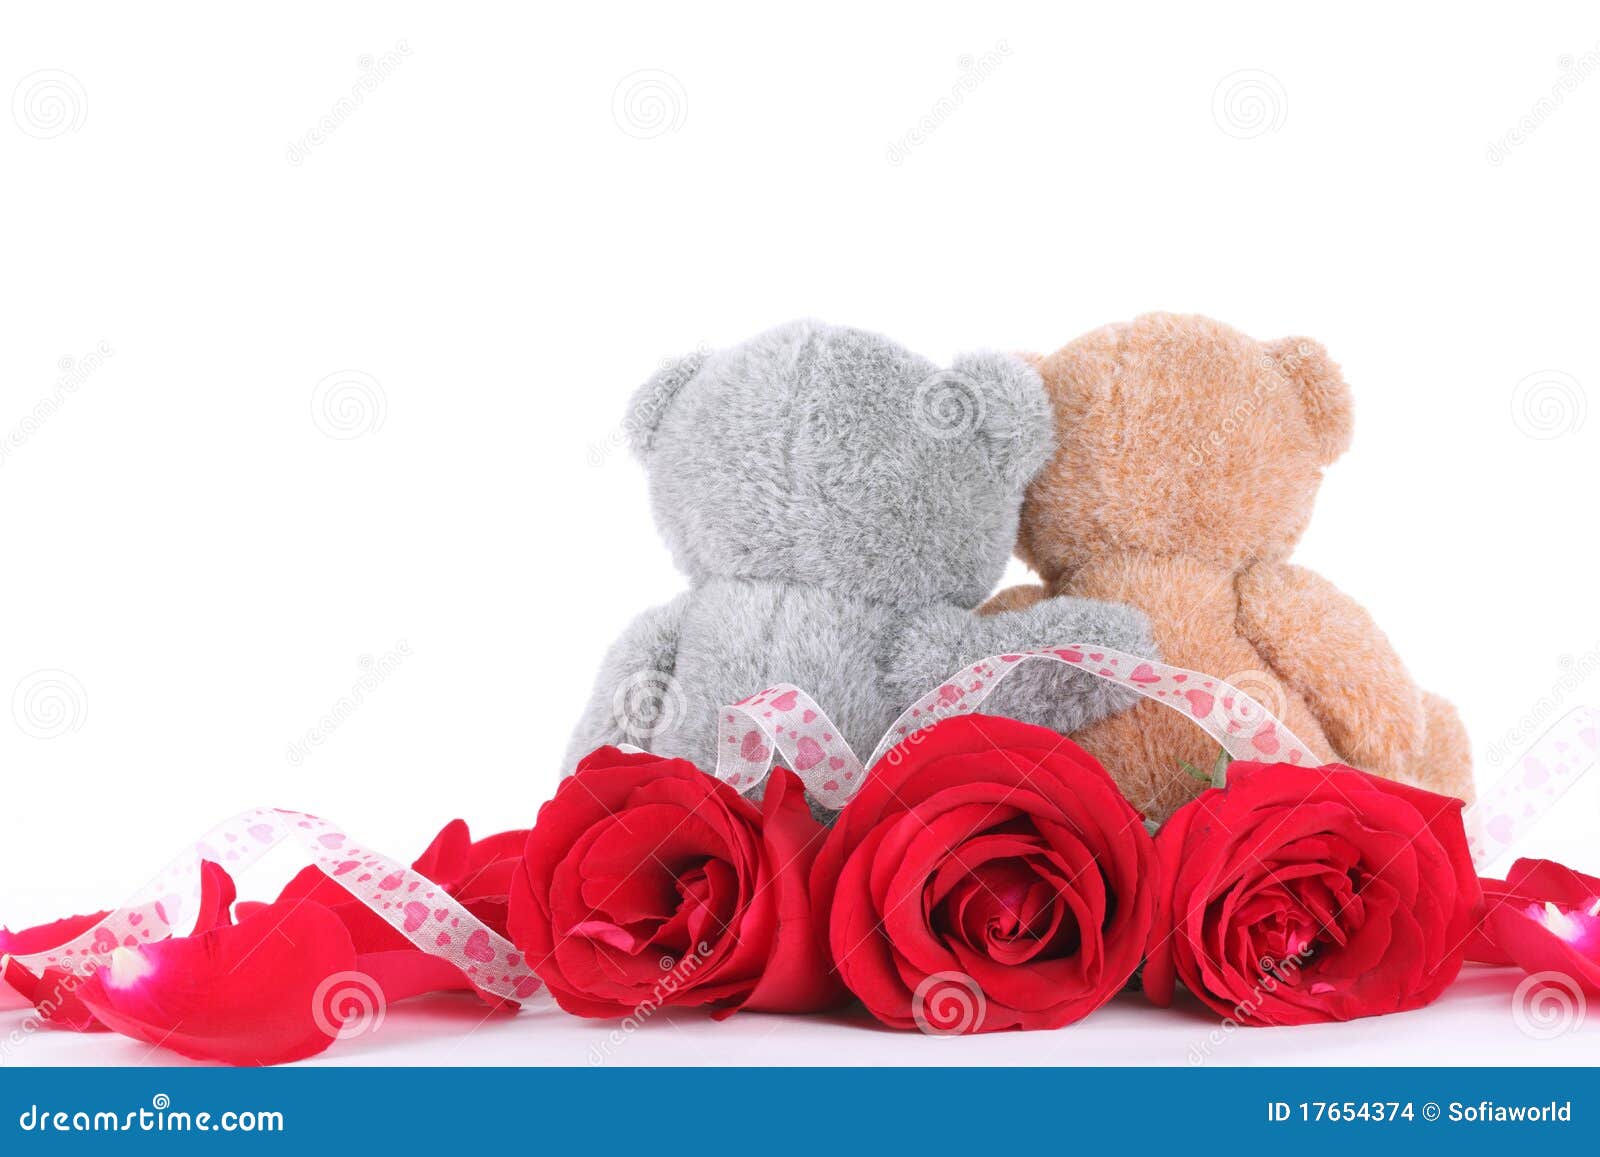 rose made teddy bear